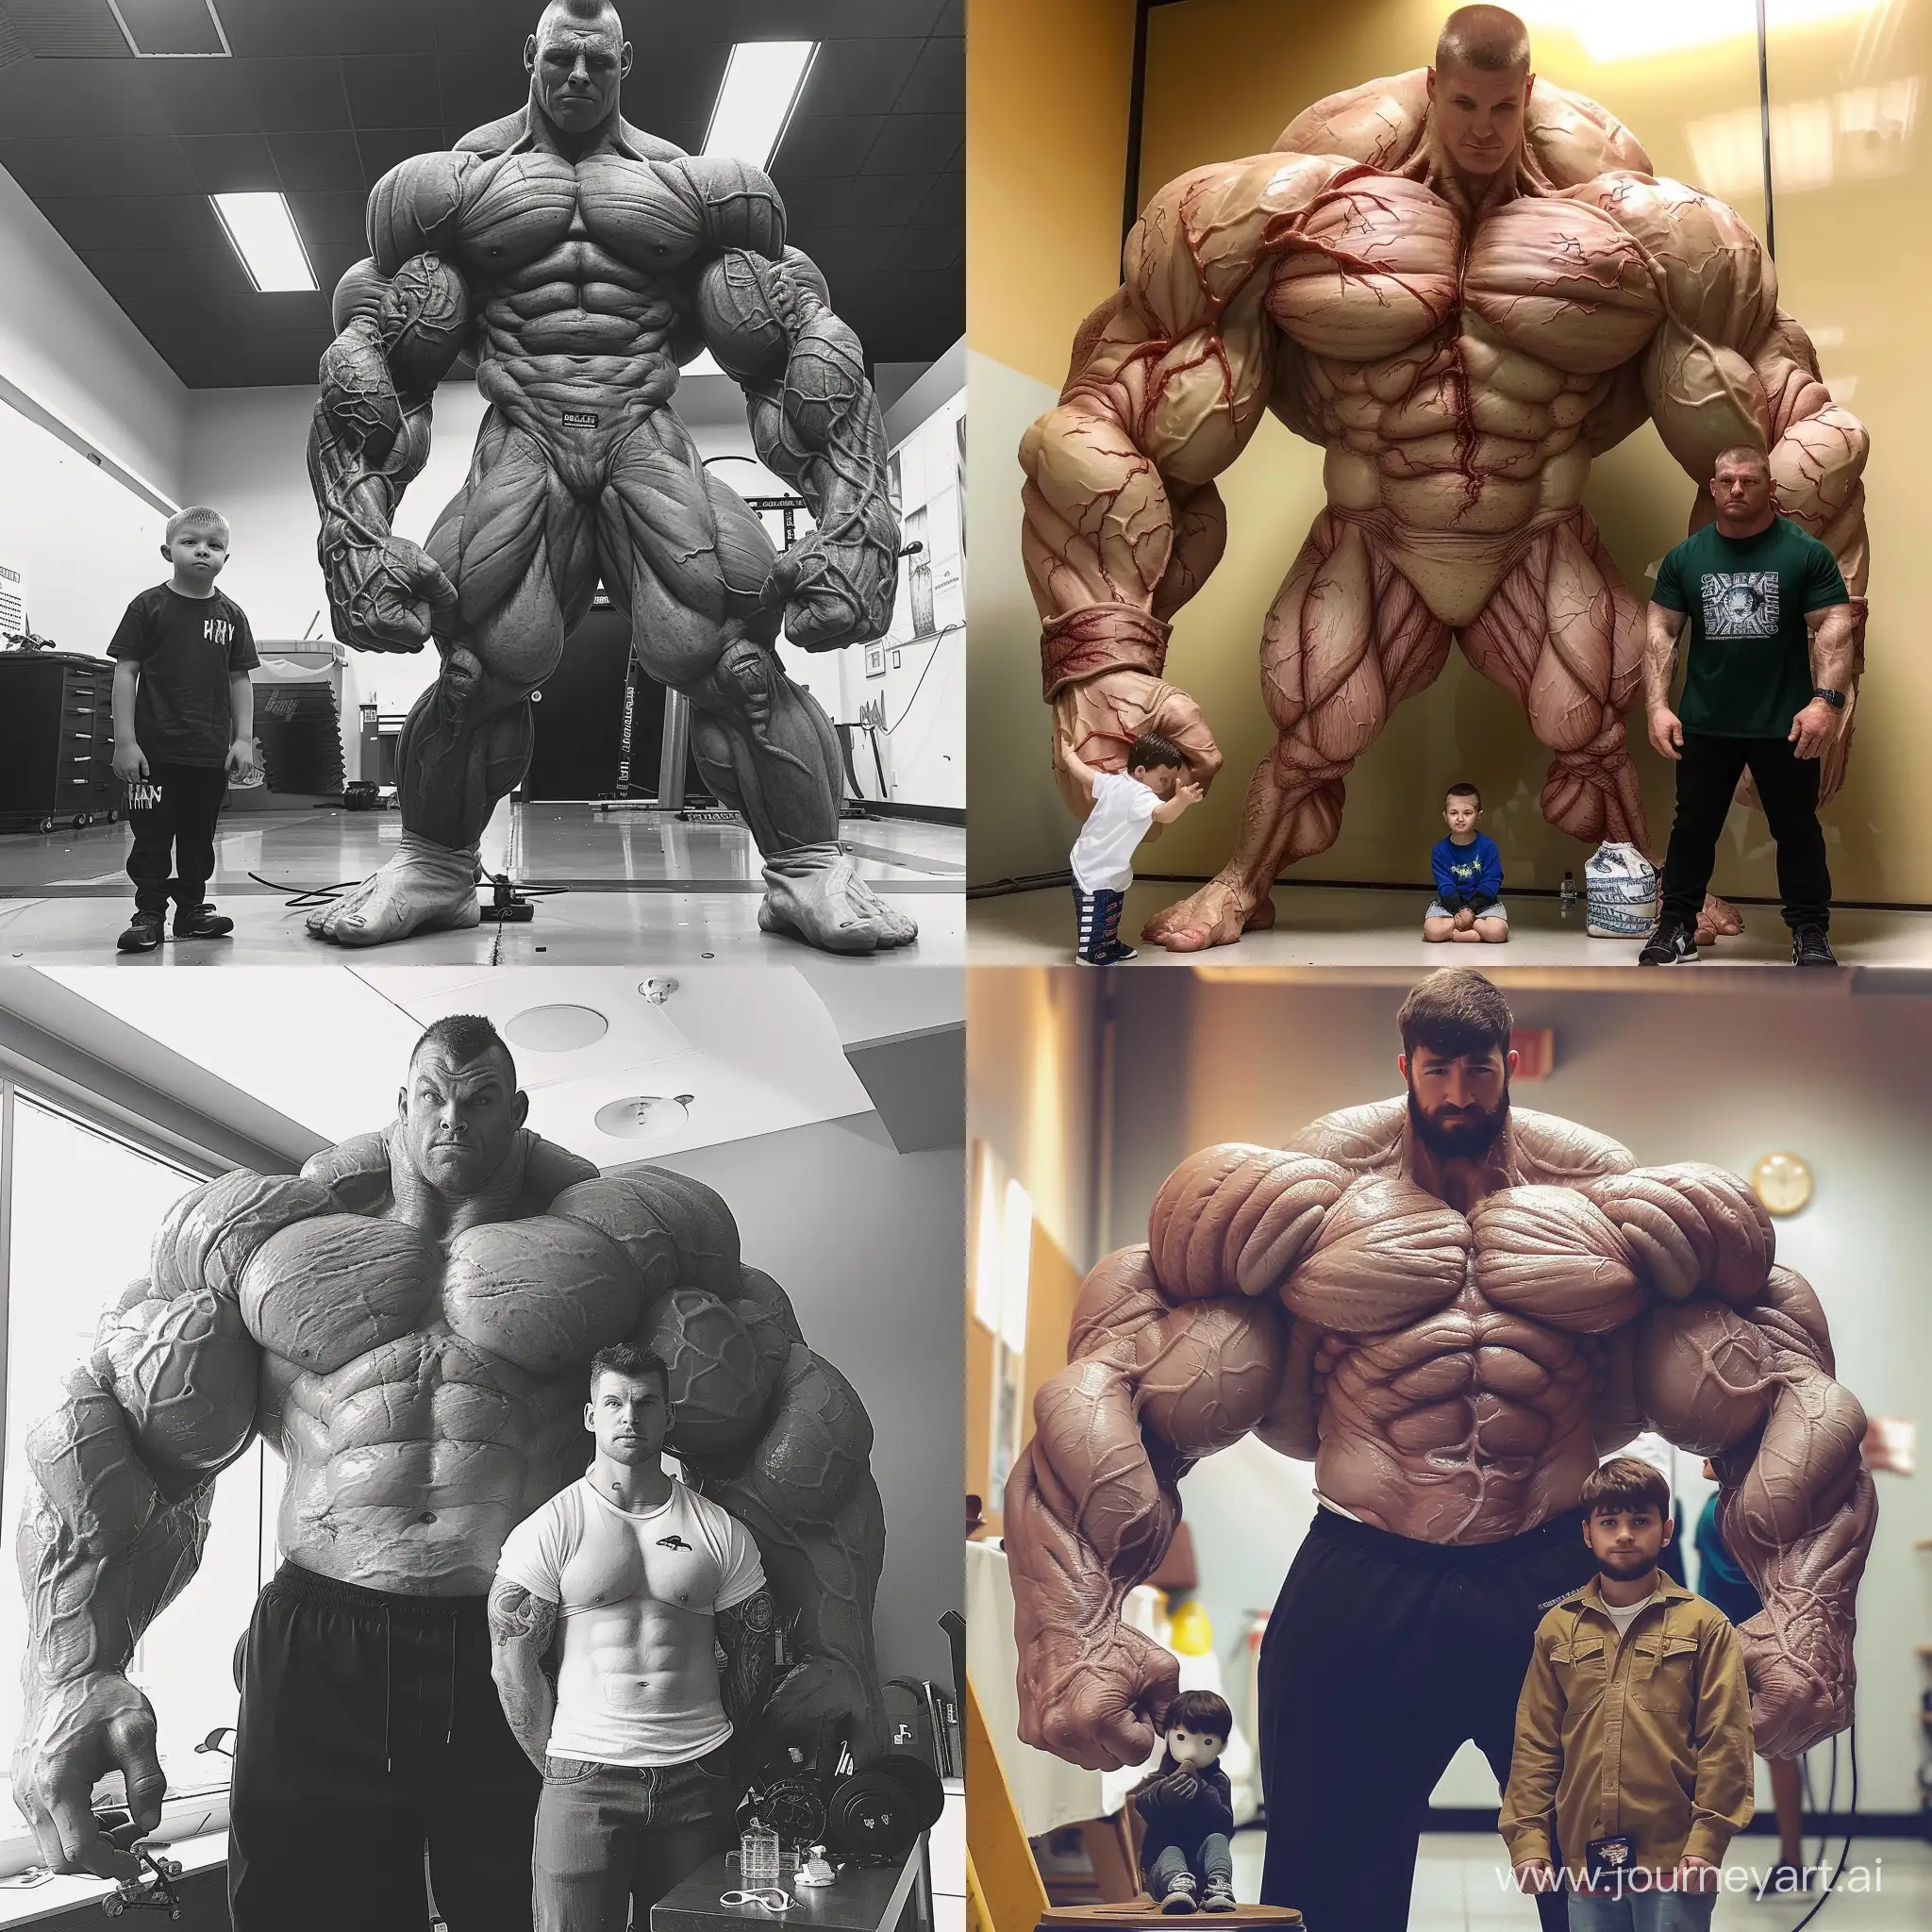 Massive-Bodybuilder-Dwarfing-Companion-in-Size